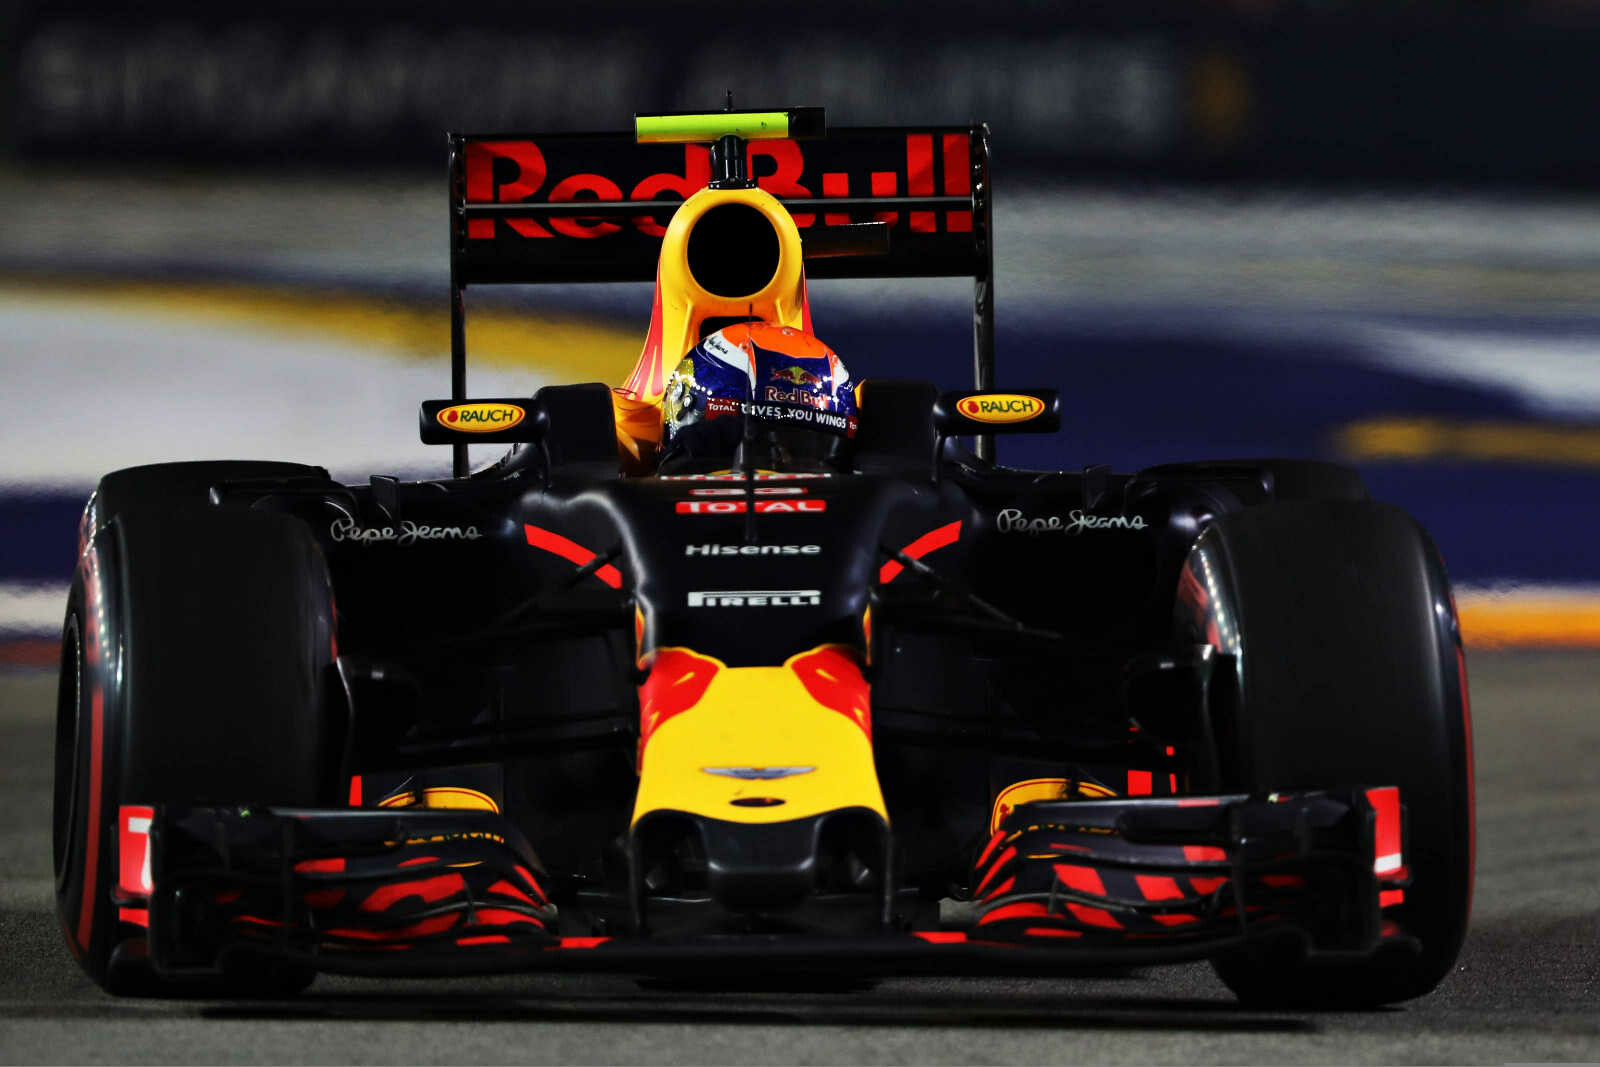 Max_Verstappen_Red_Bull_Racing_F1_Grand_Prix_Singapore_2016_race